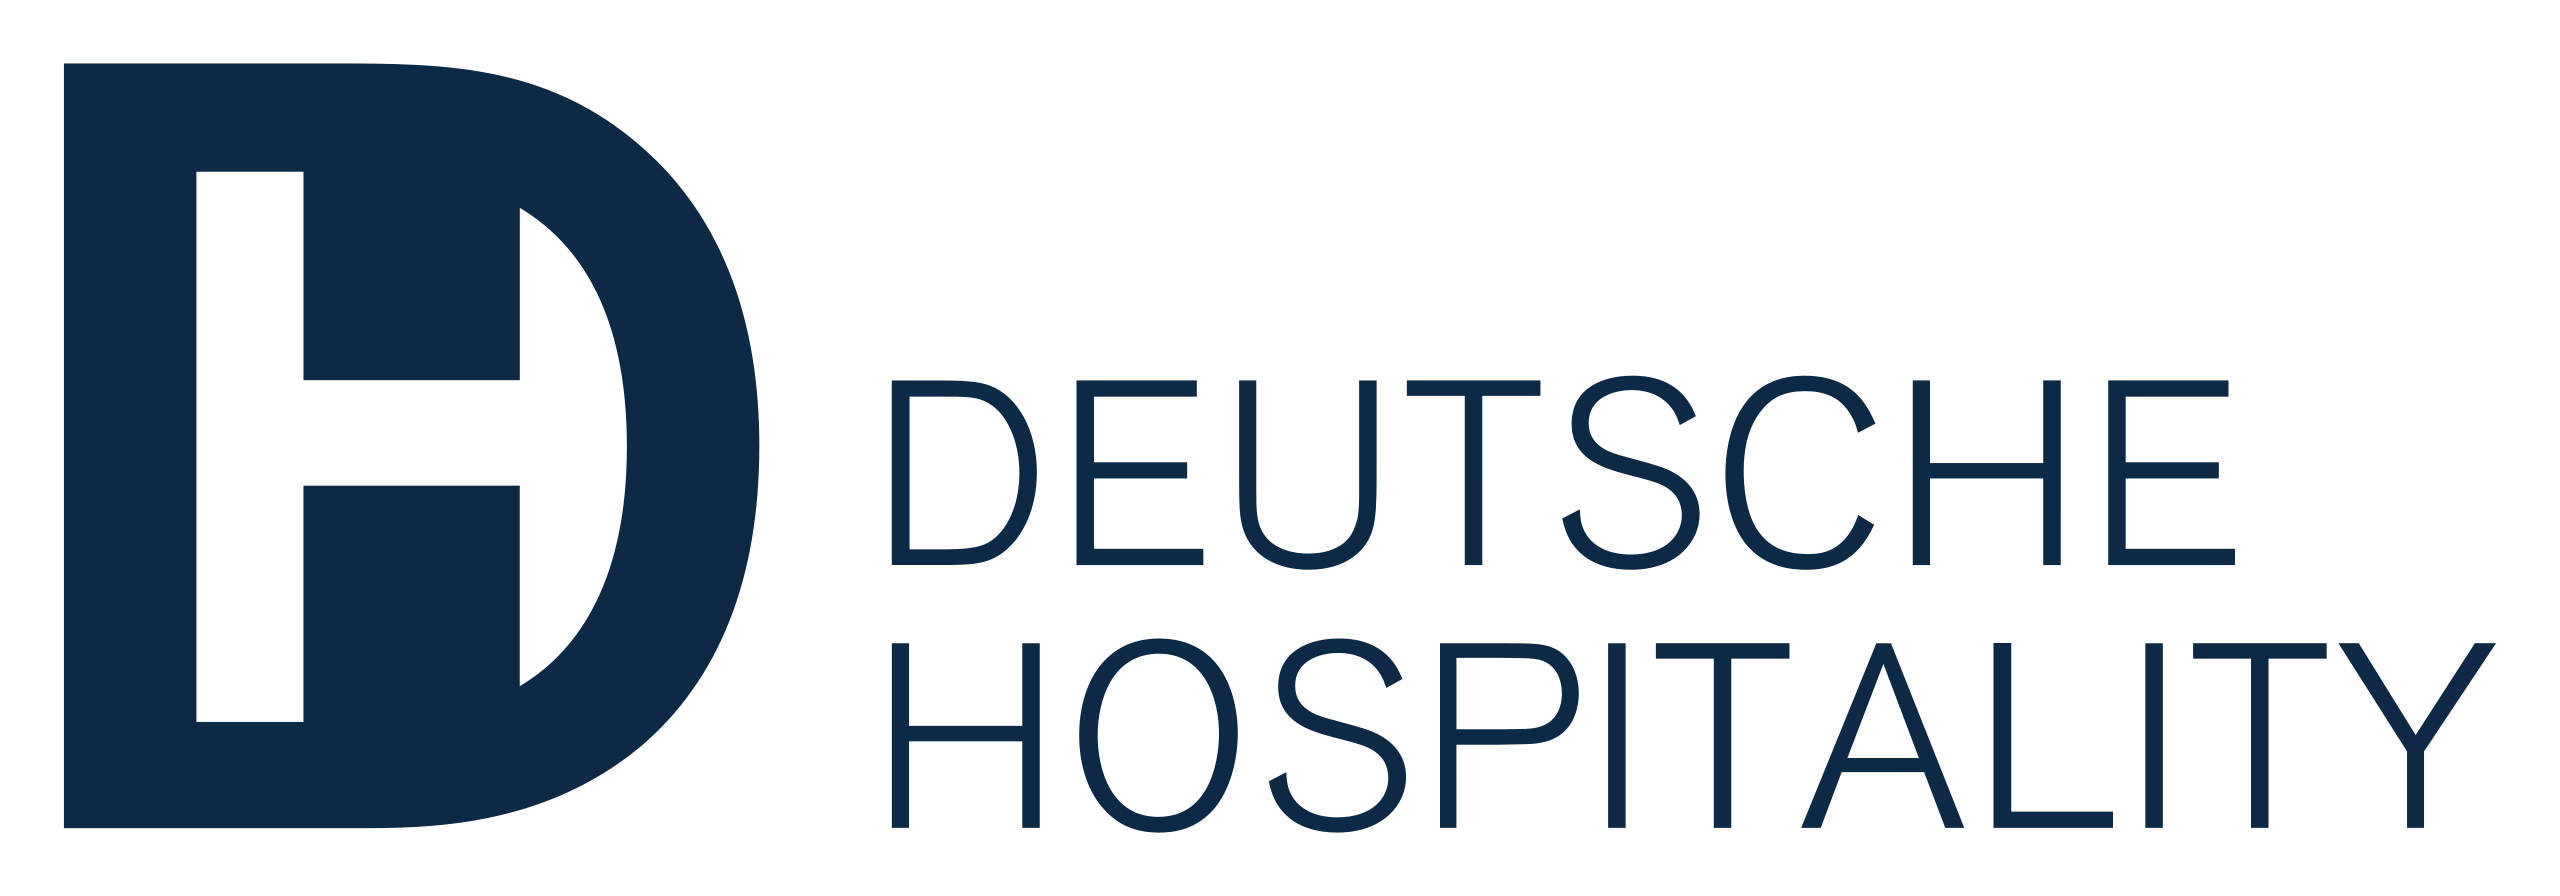 Croowy Companion partner Deutsche Hospitality